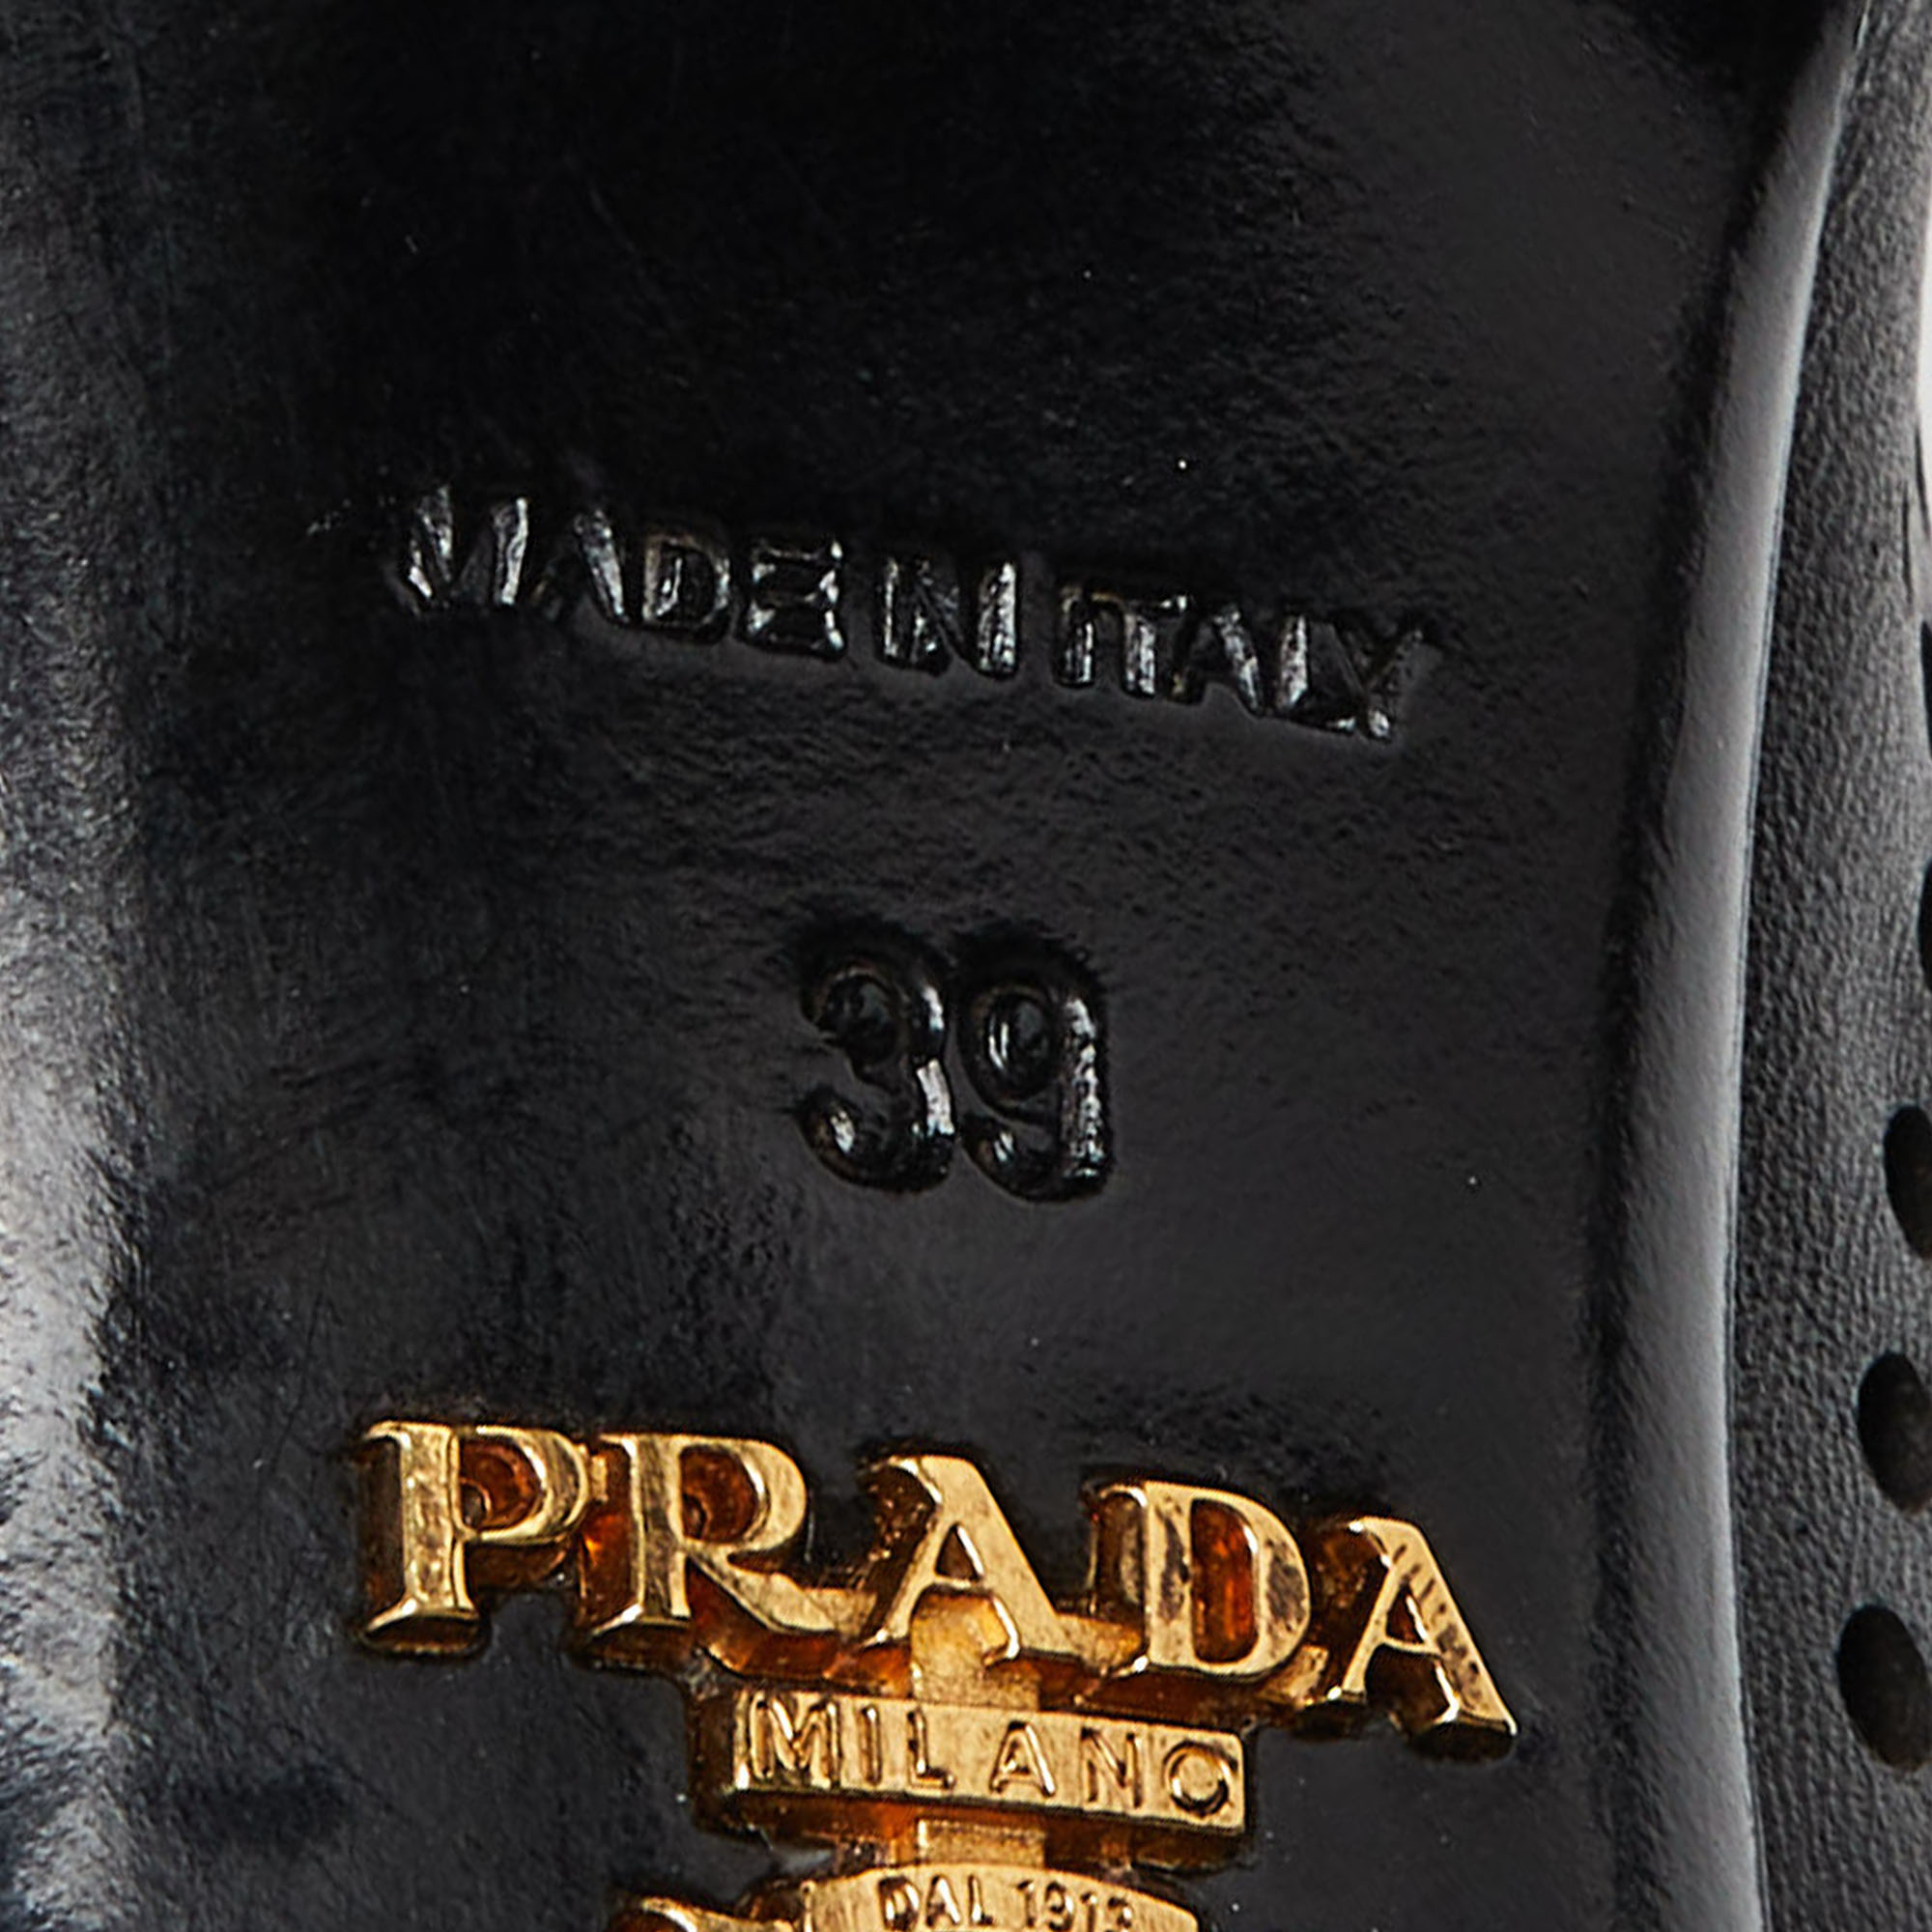 Prada Black Perforated Leather Peep Toe Ankle Booties Size 39